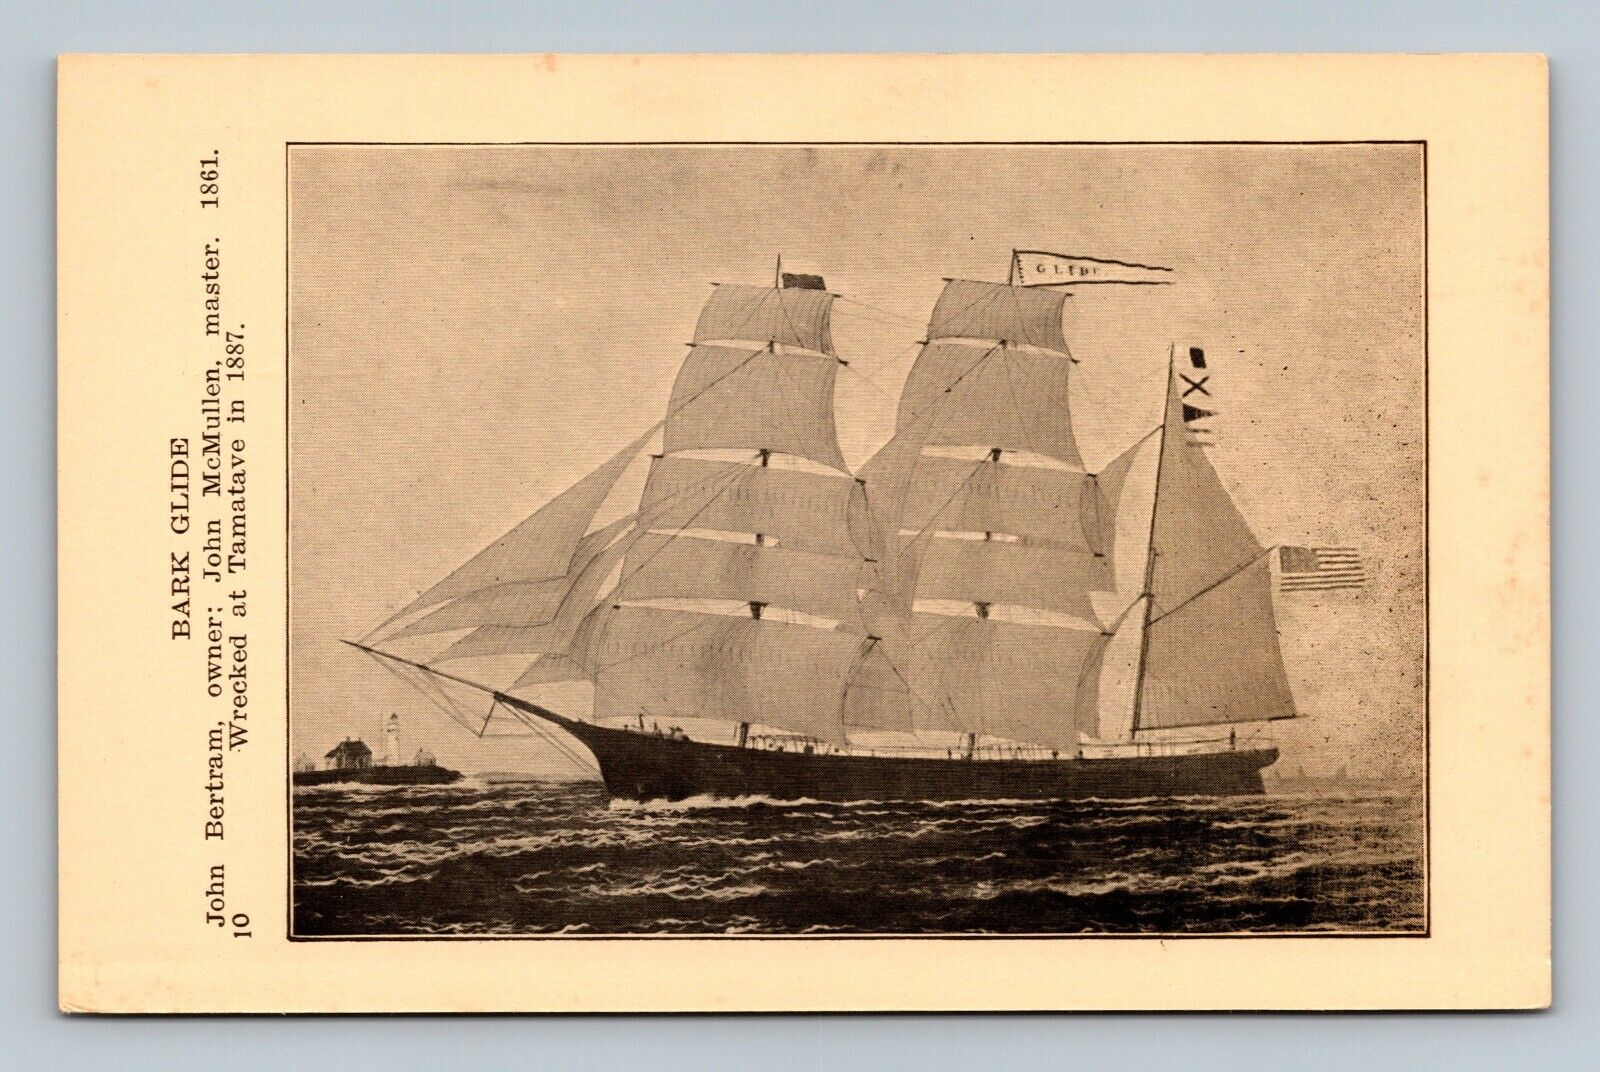 Essex Institute Tall Schooner Ship Series c1920s-30s Postcard #10 BARK GLIDE